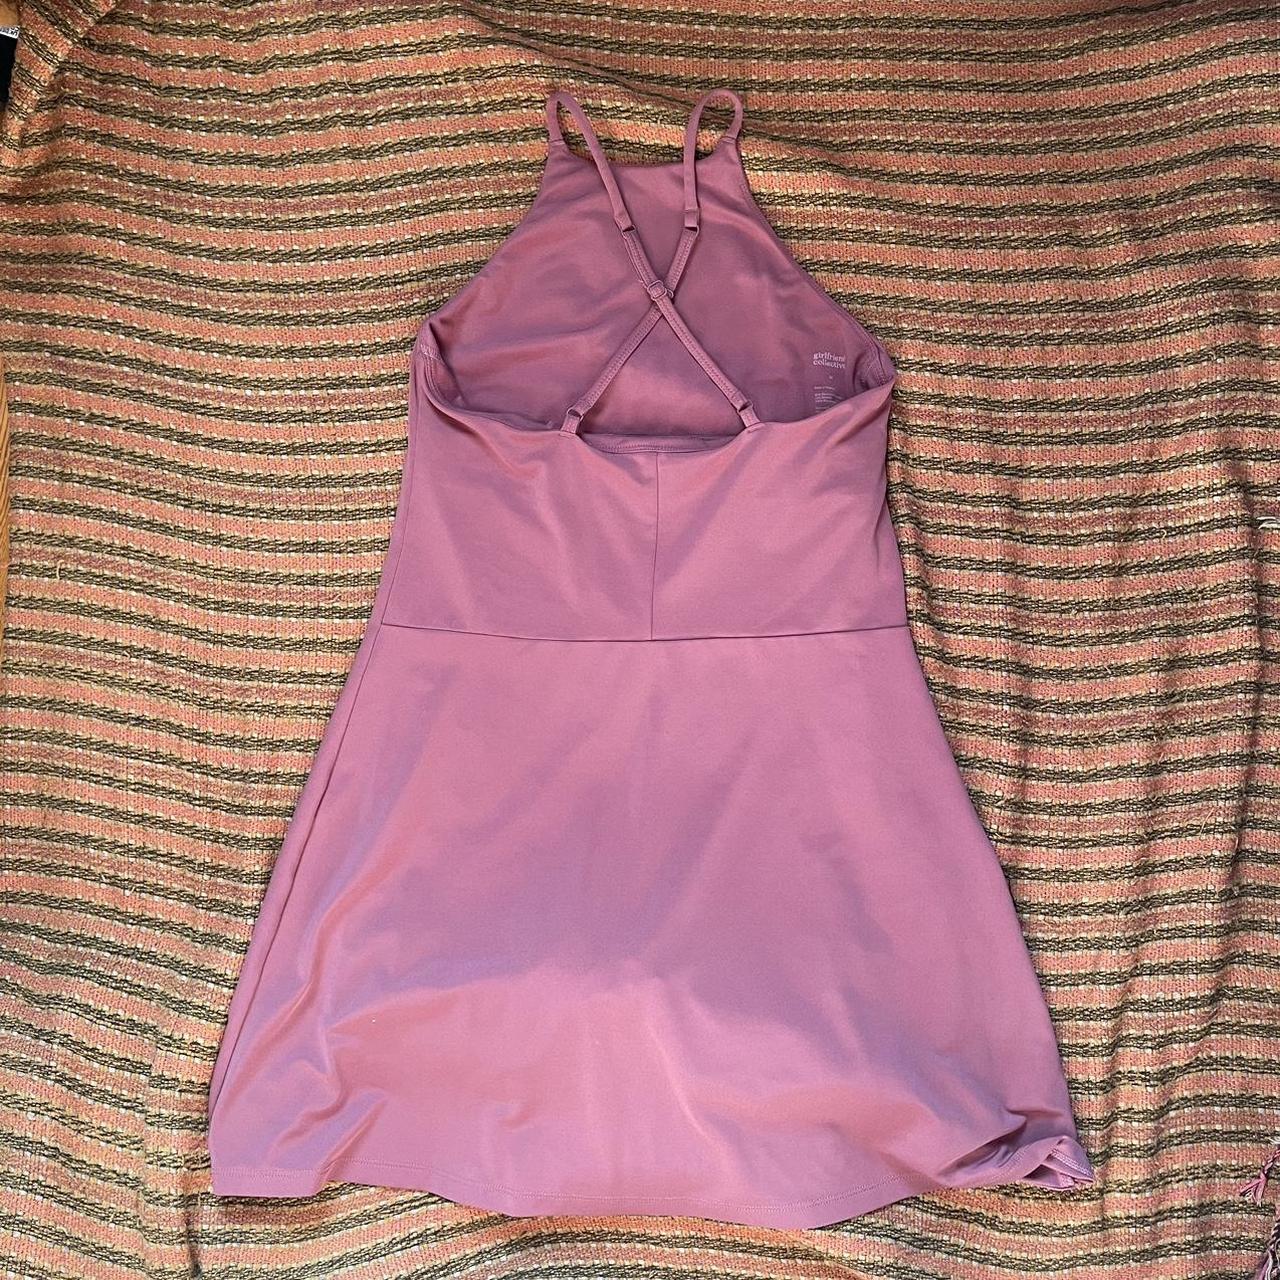 Girlfriend Collective Women's Purple and Pink Dress | Depop